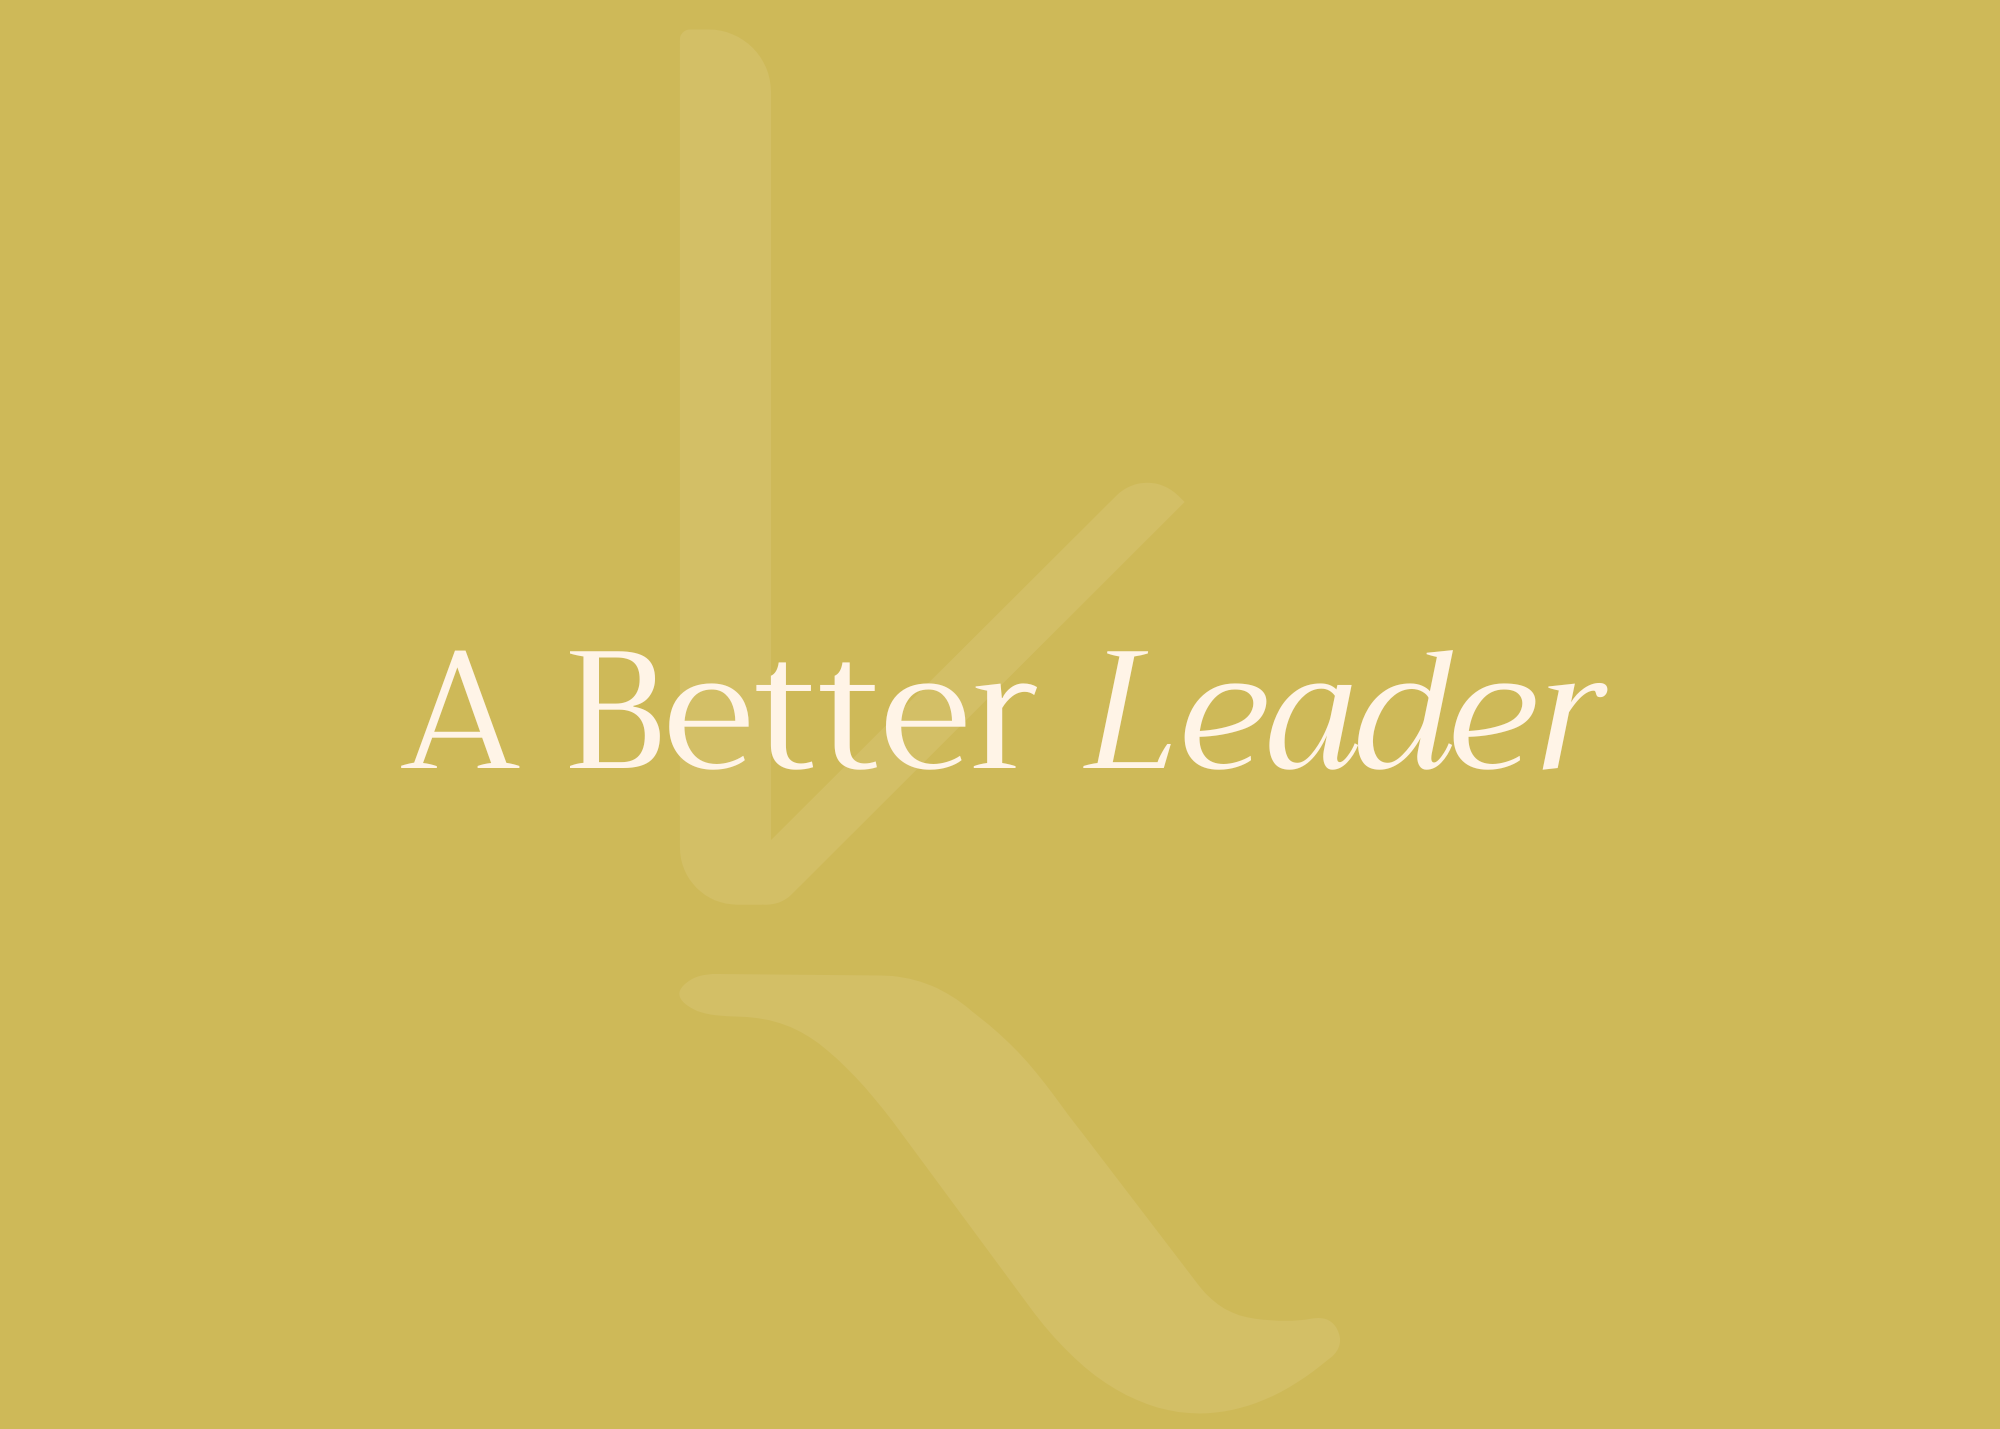 A Better leader